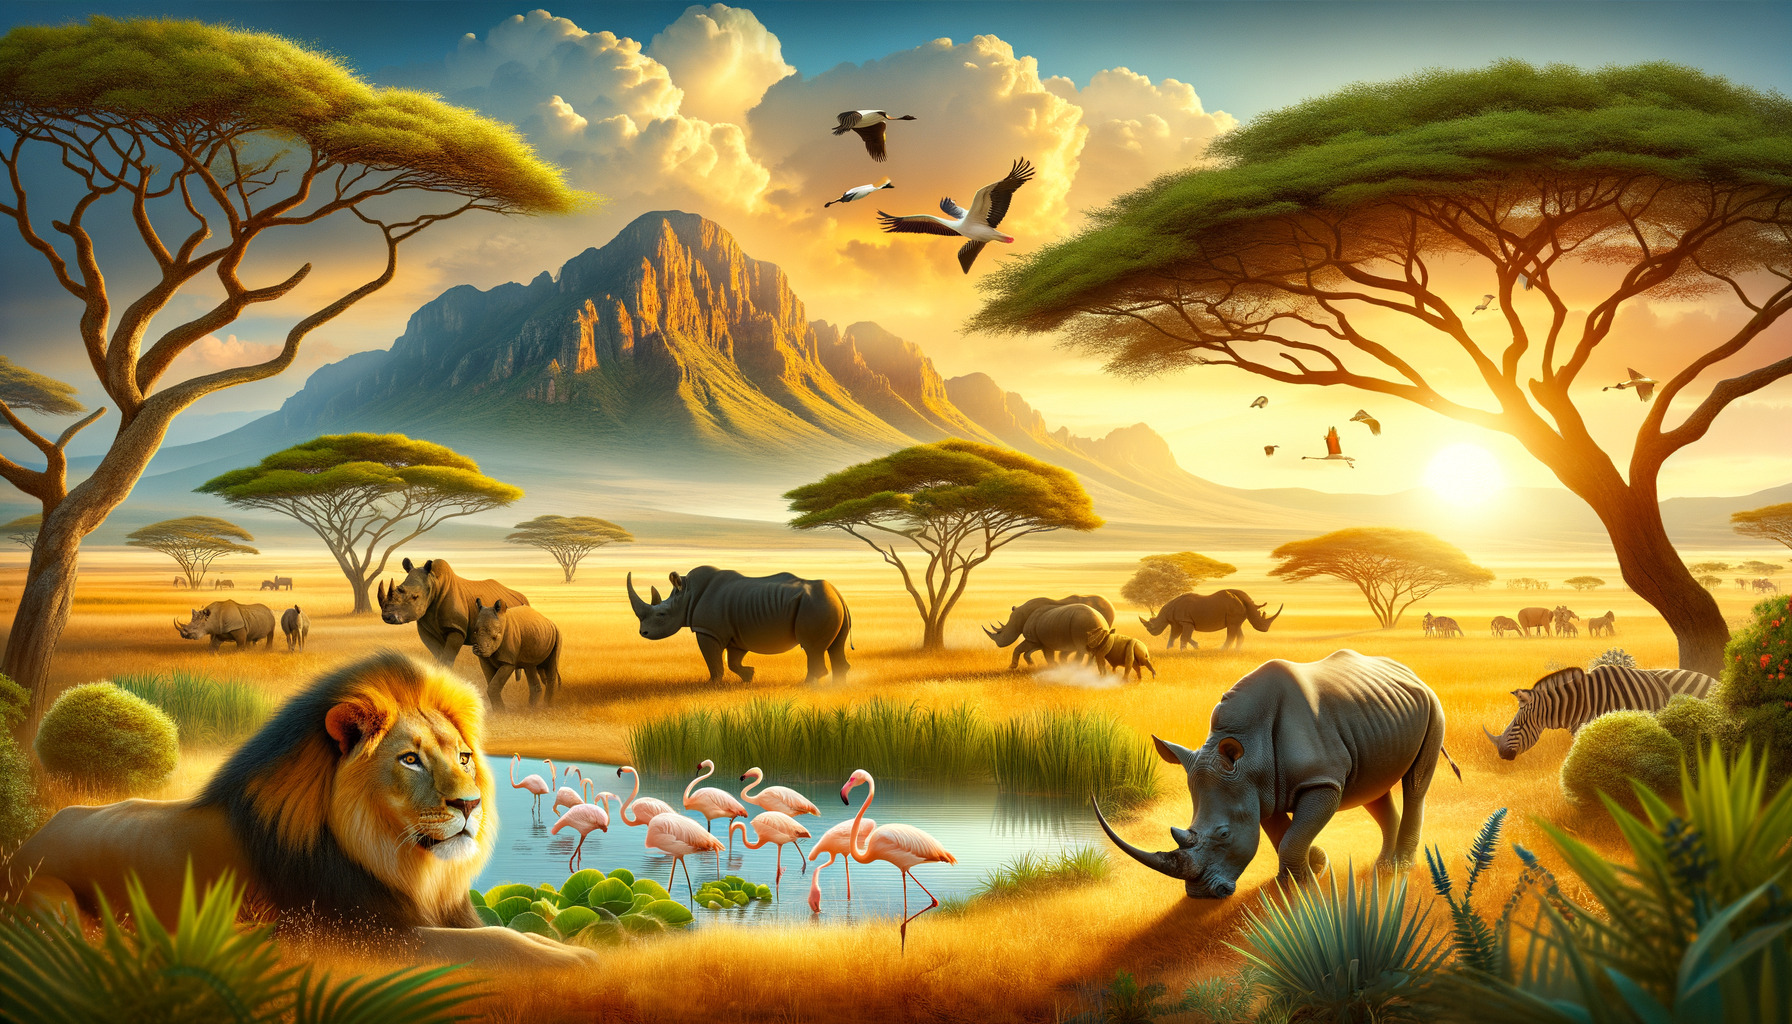 African Safari Dreams Featured Image